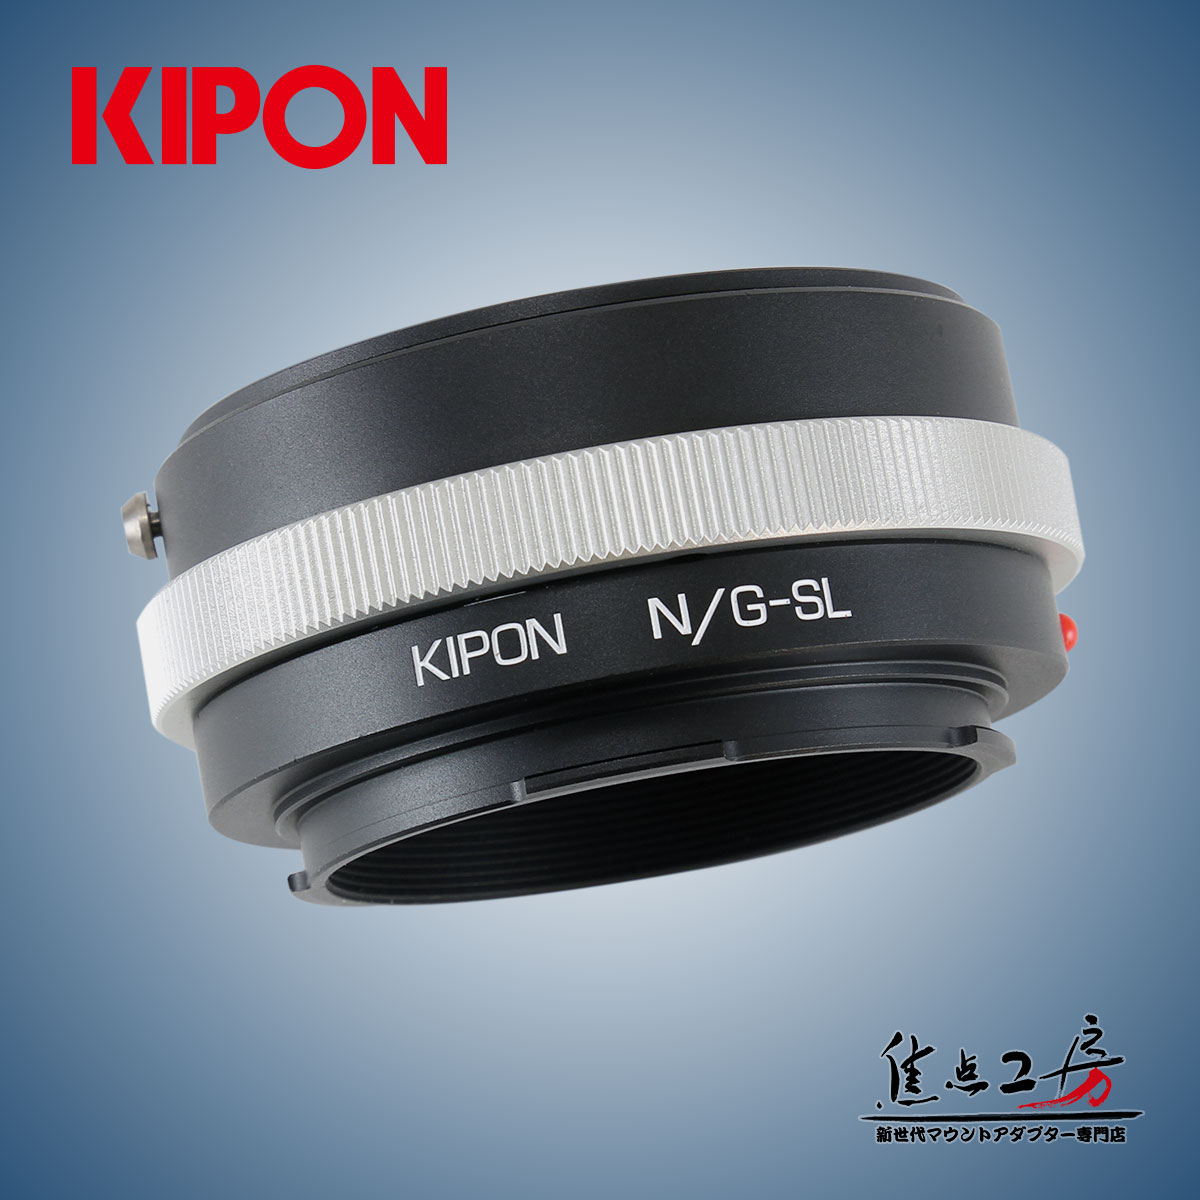 KIPON N/G-SL ニコンFマウント/Gシリーズレンズ - ライカSLマウントカメラ